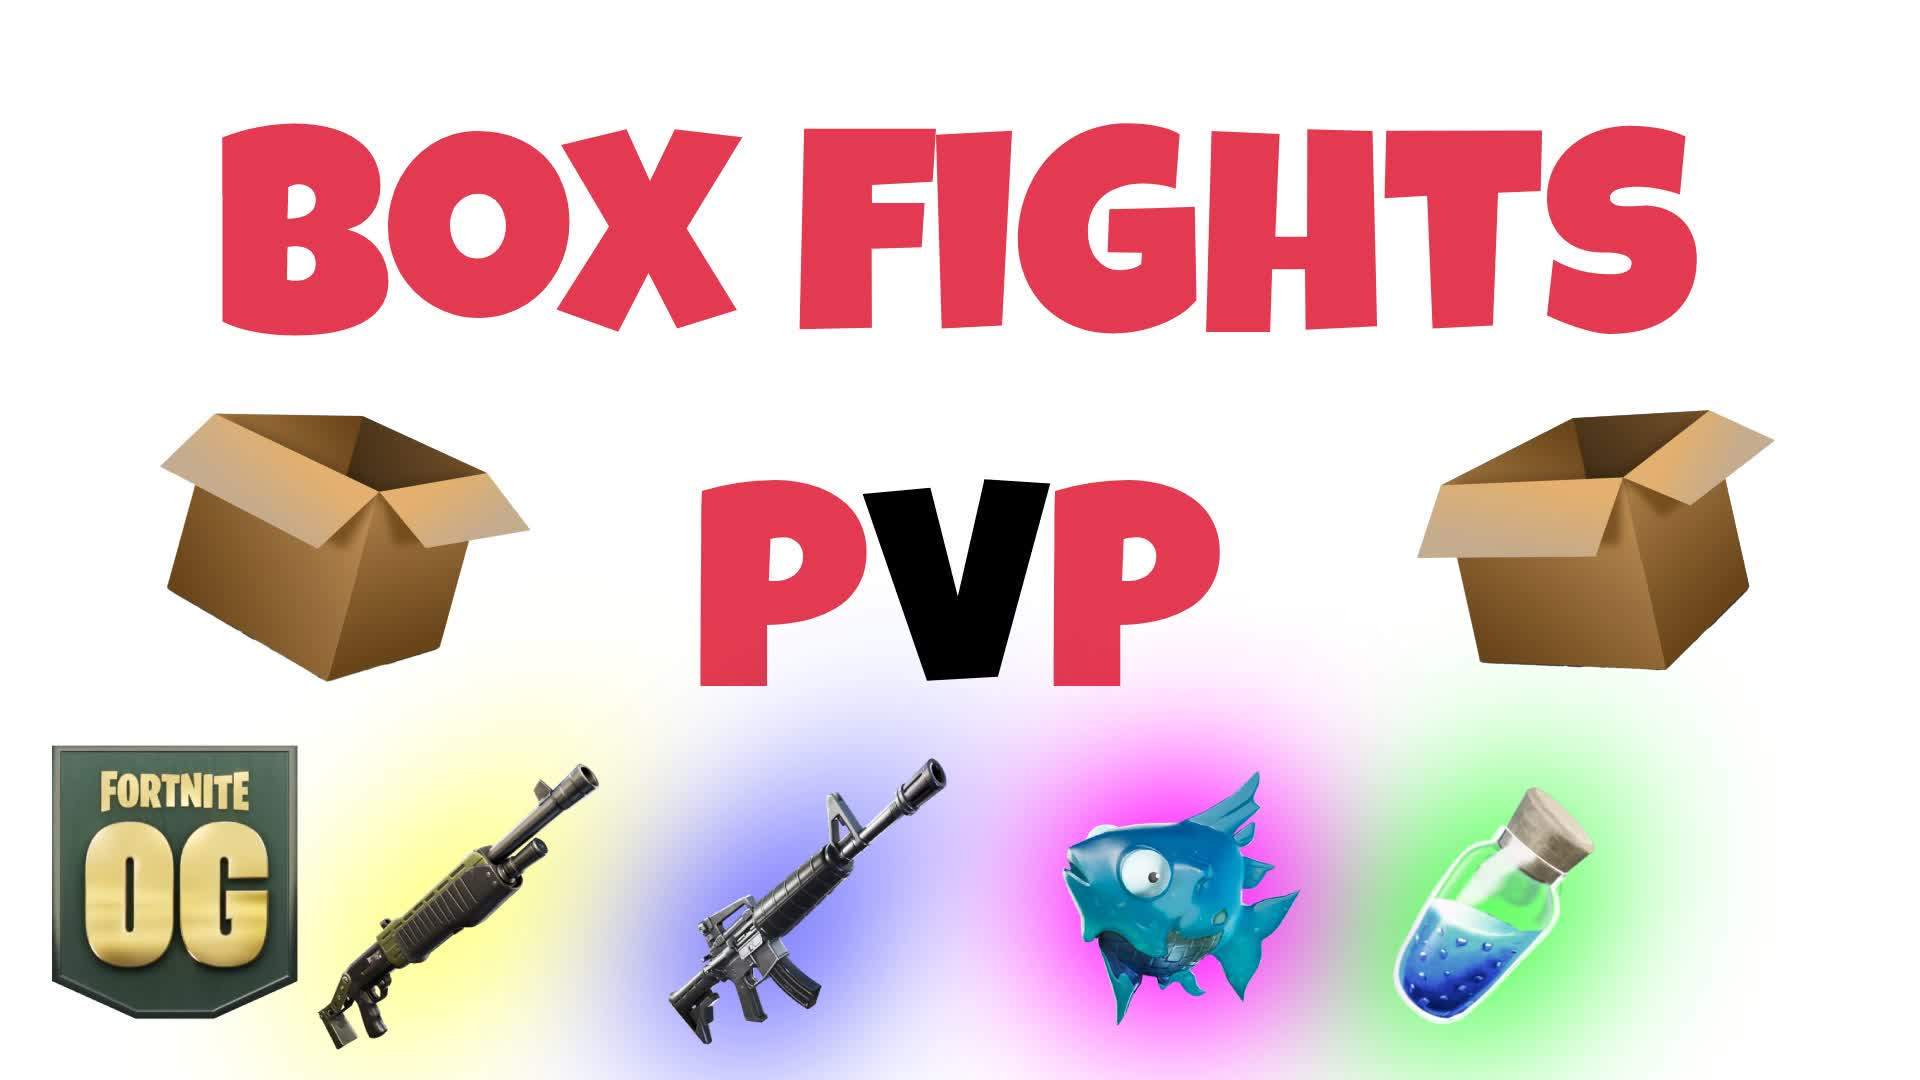 Box Fights PVP